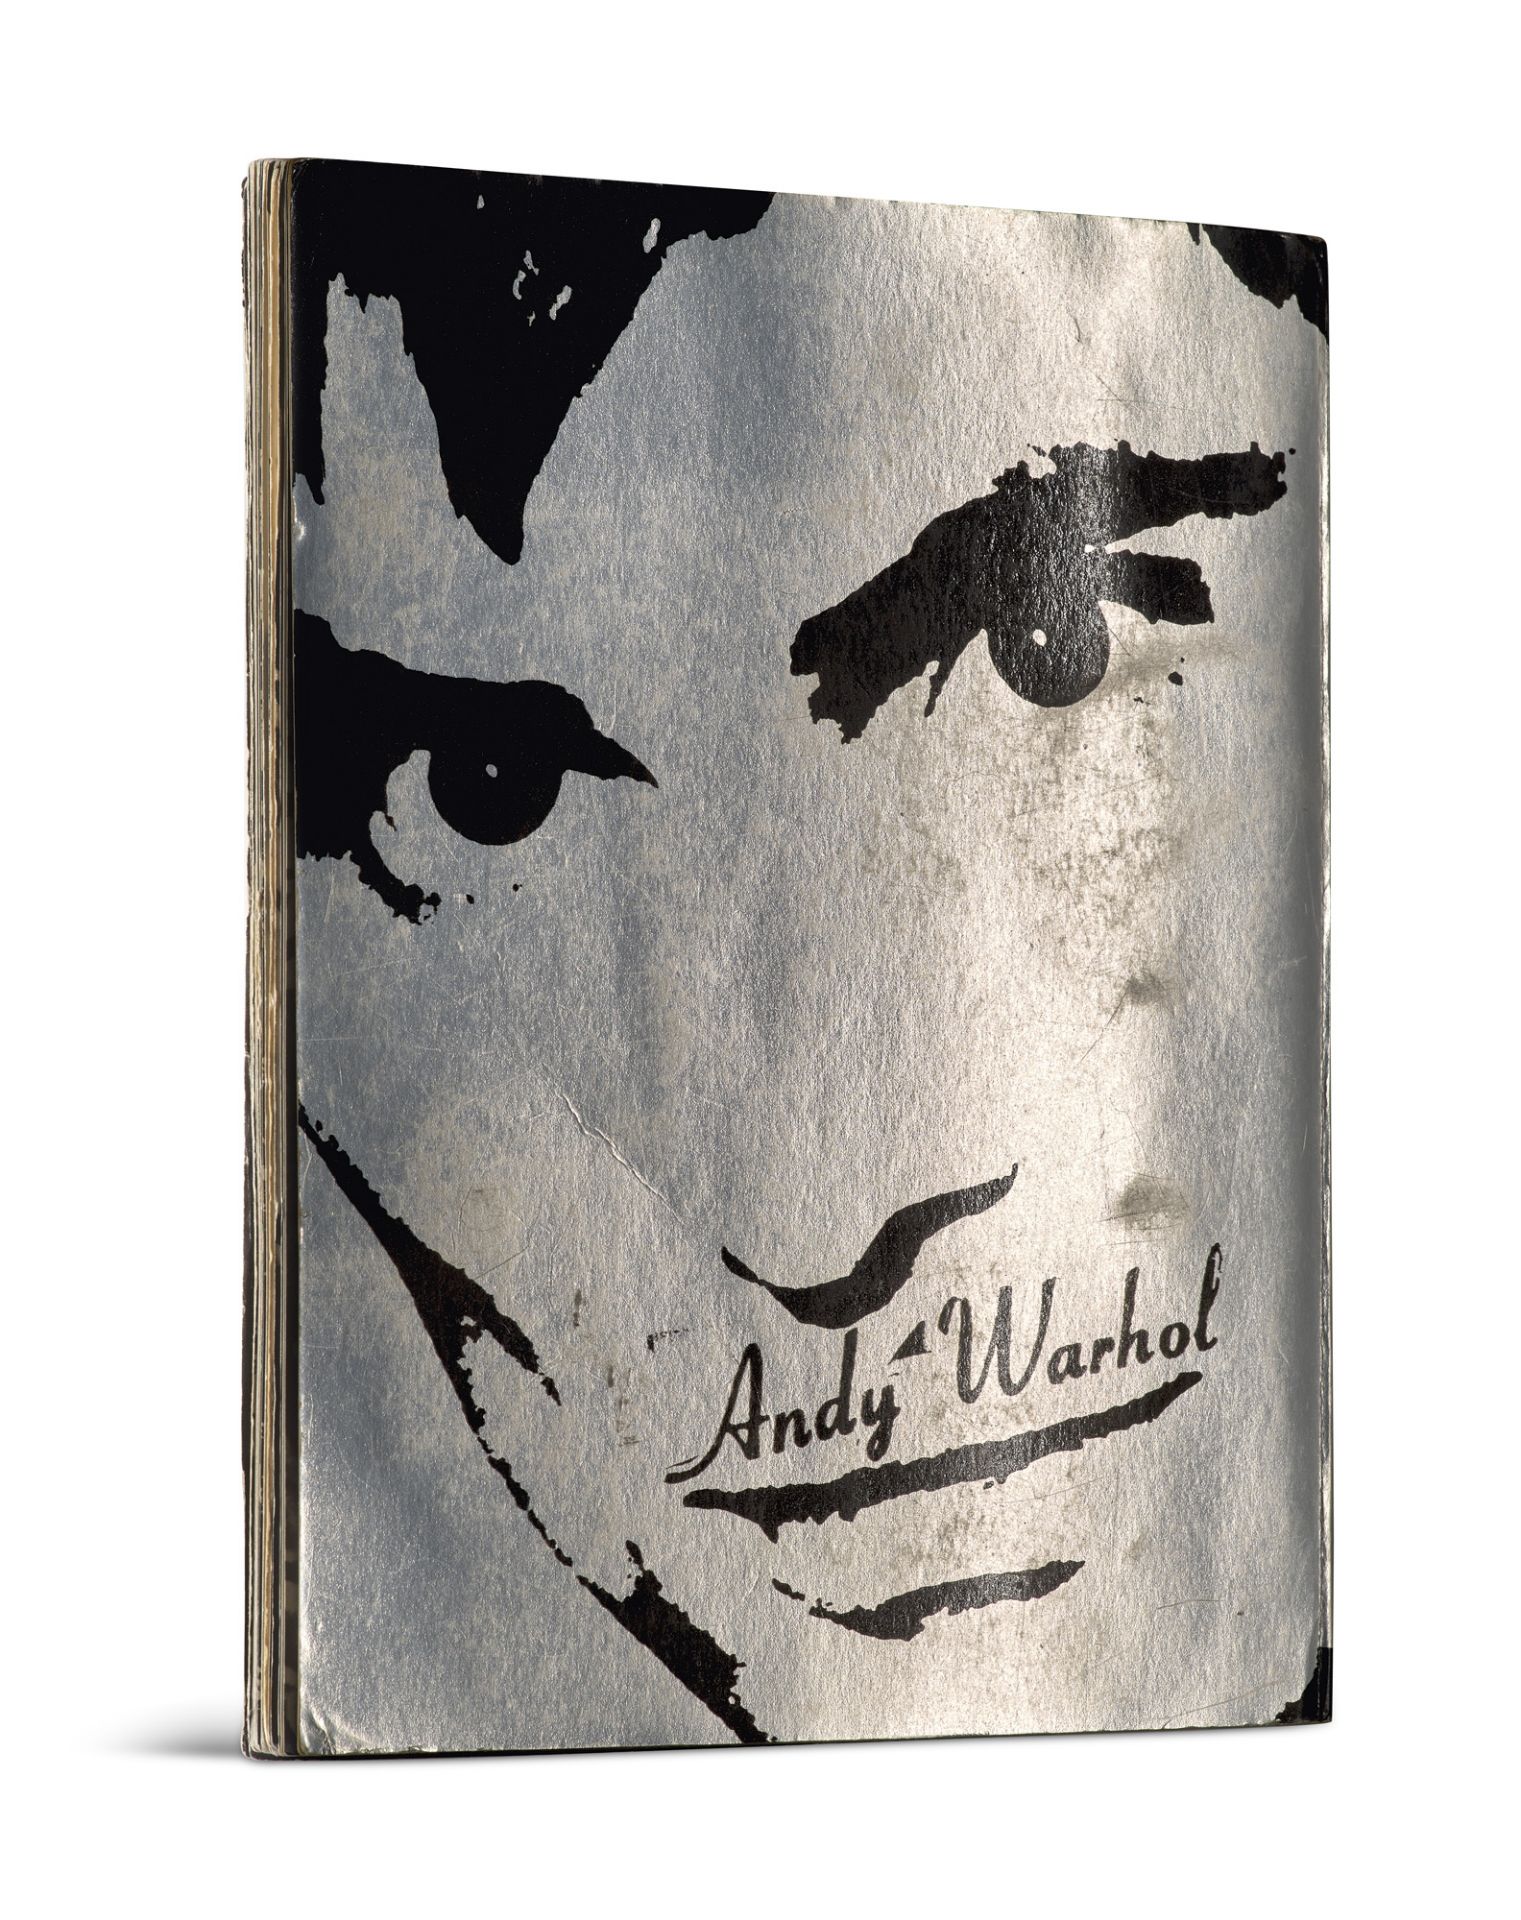 Pop Art - - Andy Warhol. Index (book) - Image 2 of 2